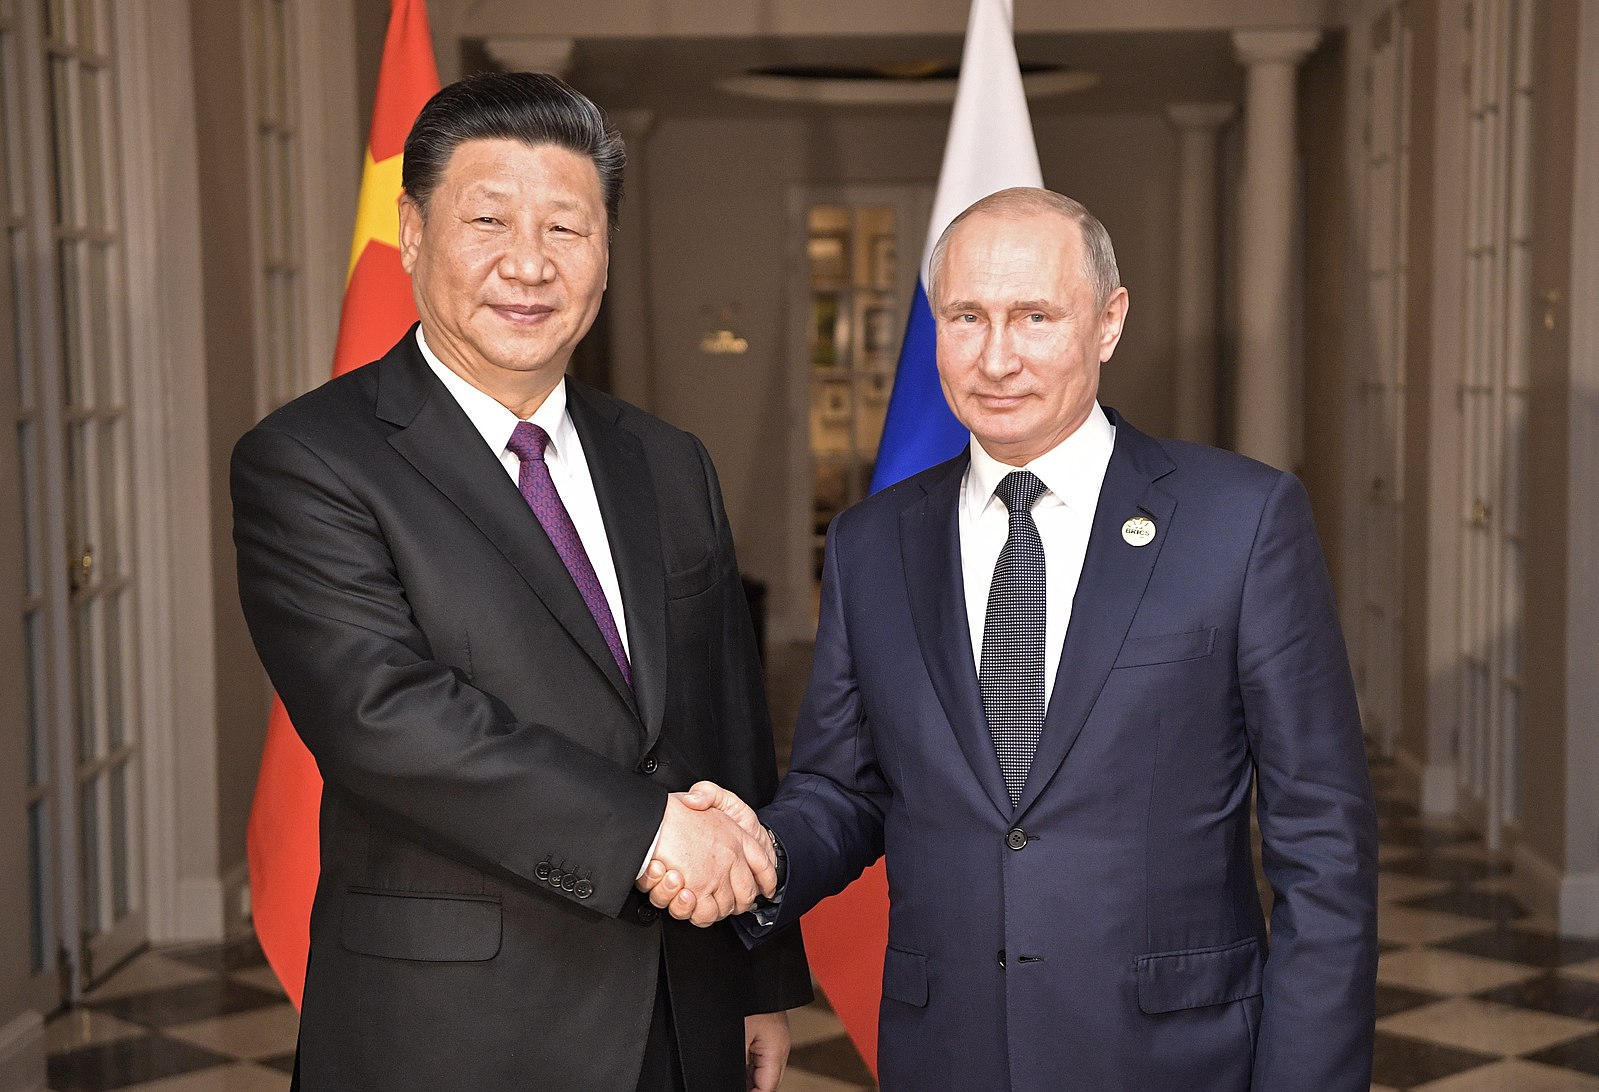 Russian President Vladimir Putin and Chinese President Xi Jinping shake hands